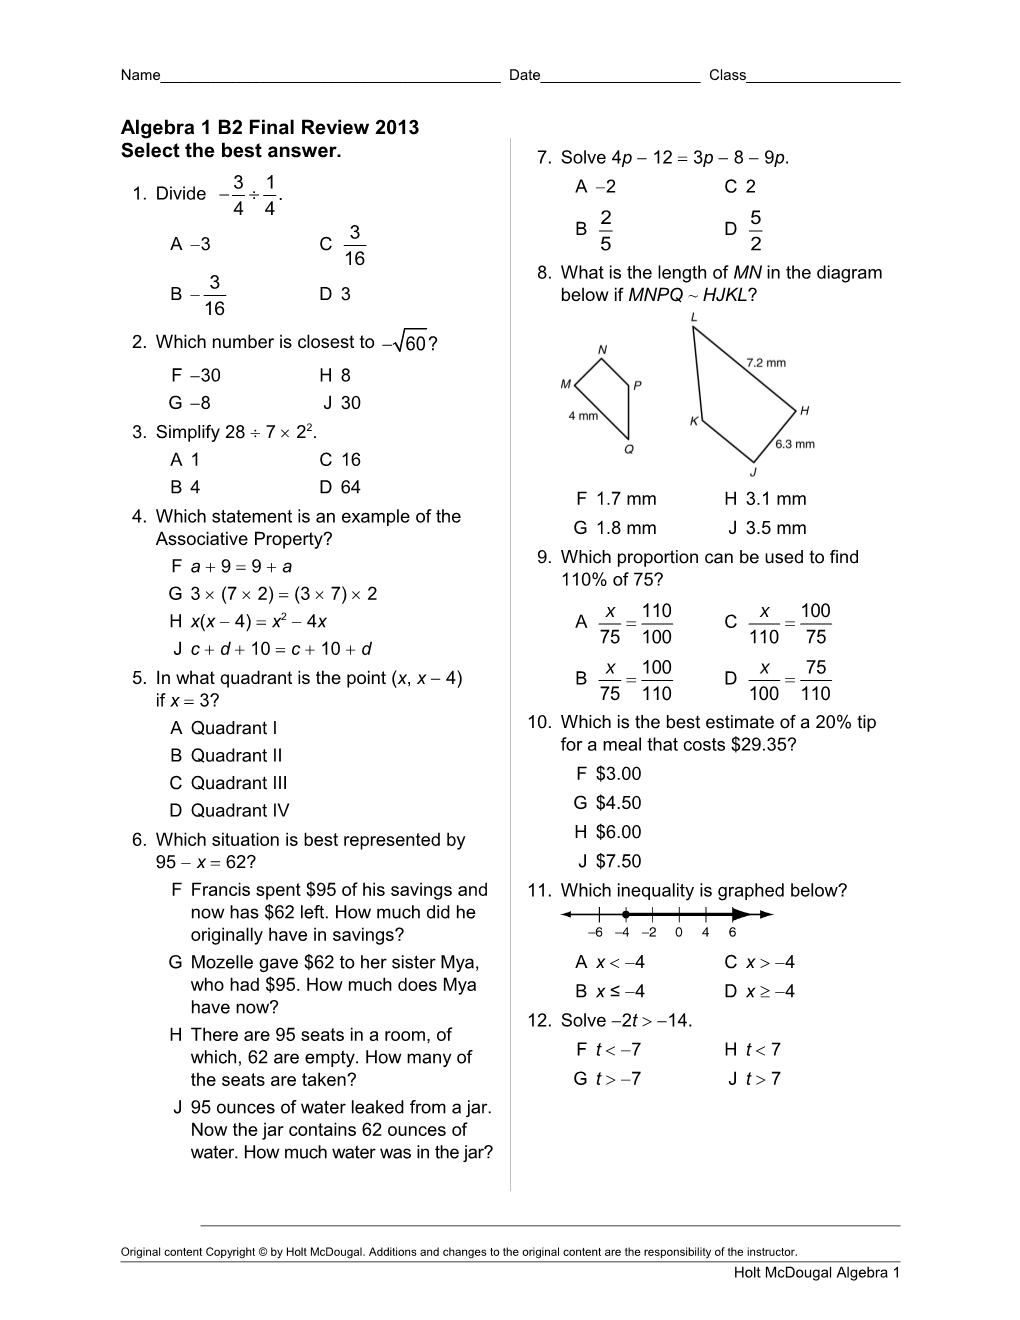 Algebra 1 B2 Final Review 2013